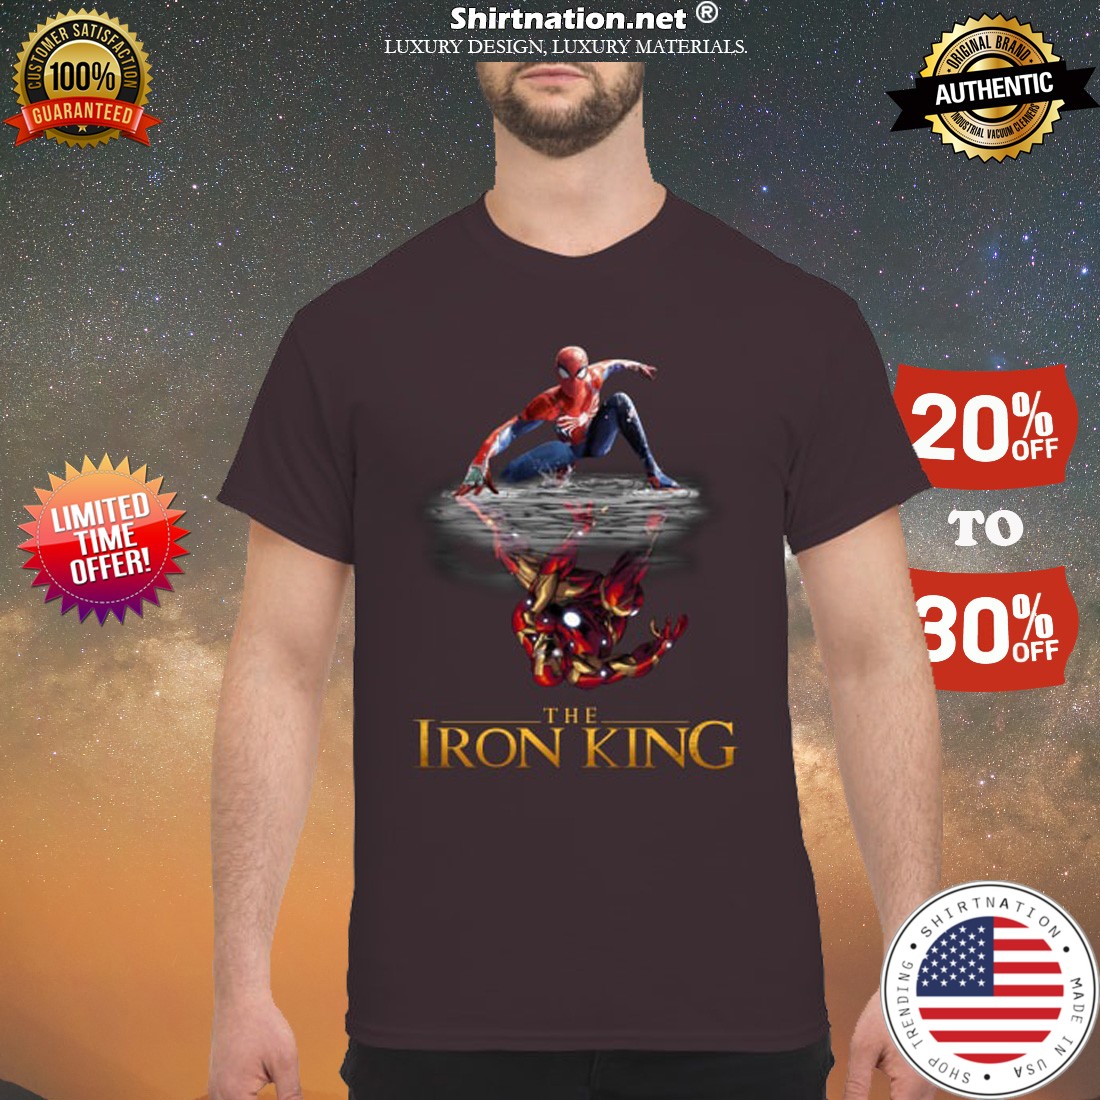 The Iron King shirt